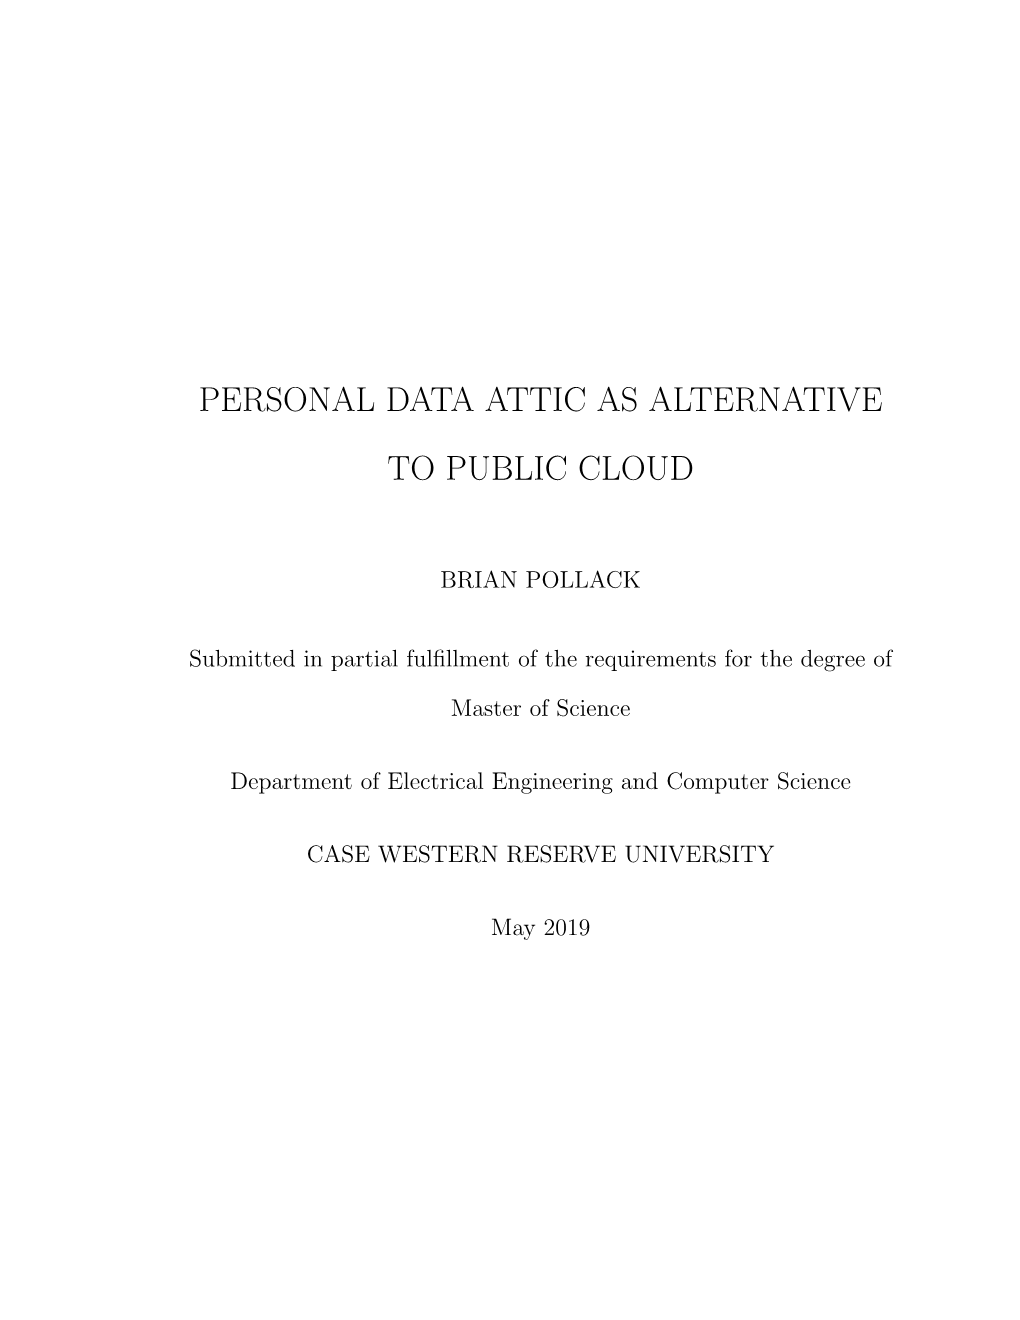 Personal Data Attic As Alternative to Public Cloud